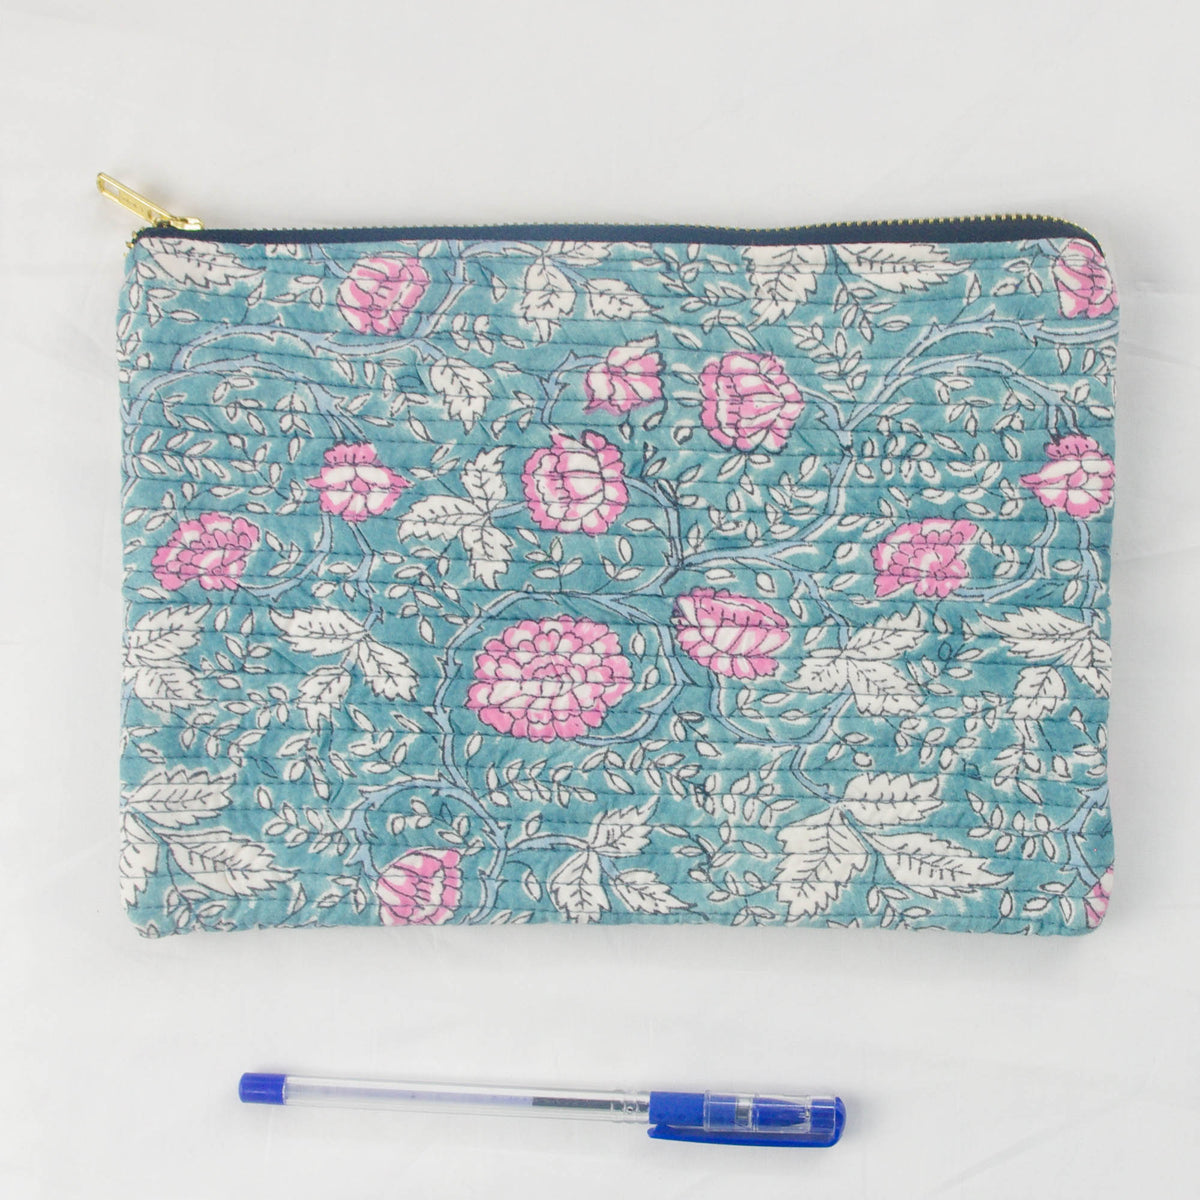 Block Print Makeup Pouch or Pencil Case-Blue Pink White Floral